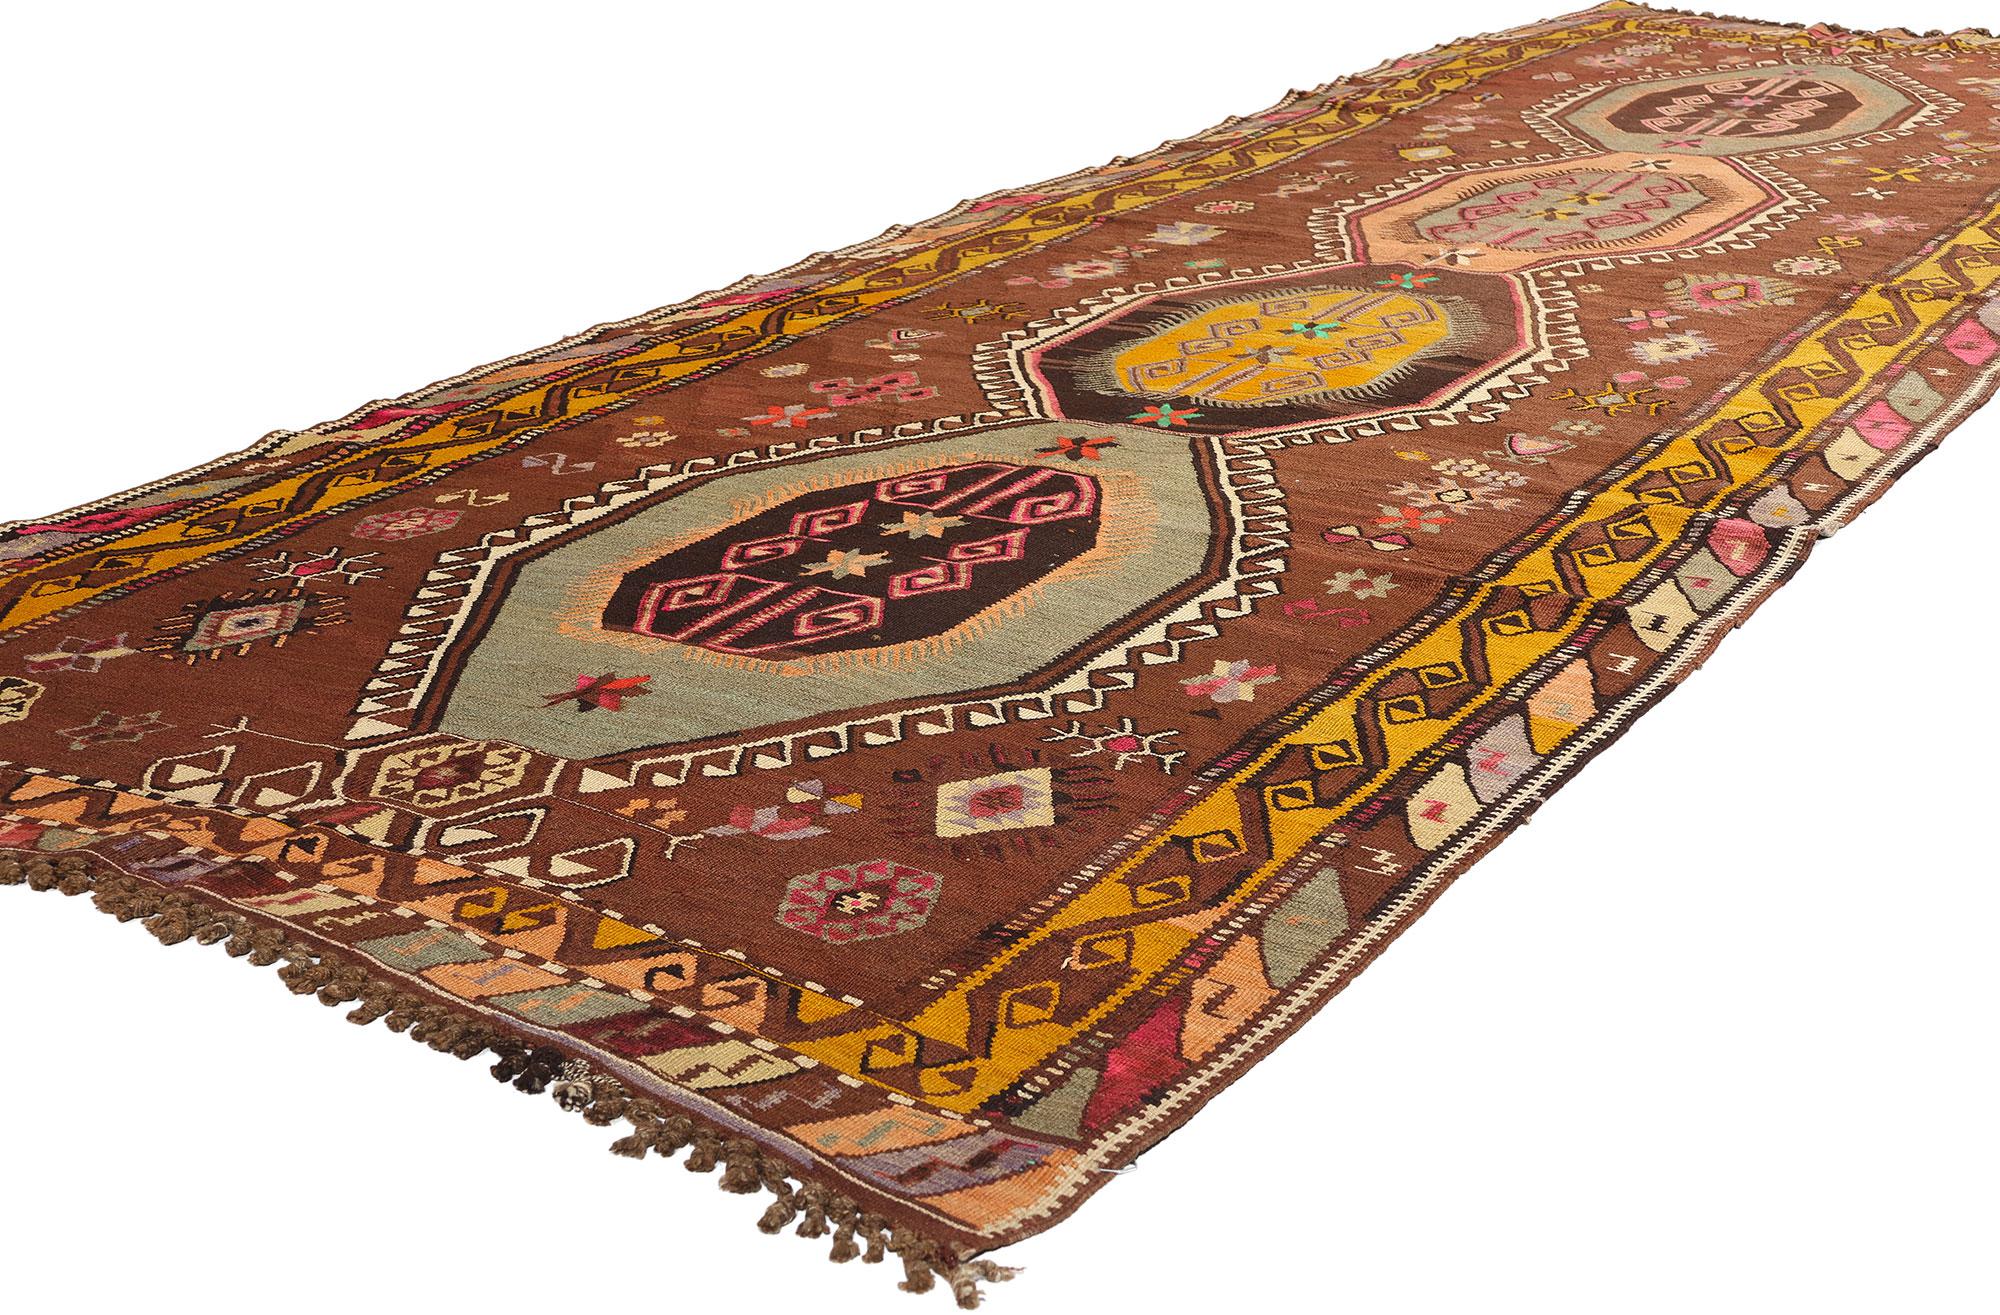 70301 Vintage Turkish Kilim Rug, 05'05 x 14'11. Turkish Kilim rugs, commonly known as 